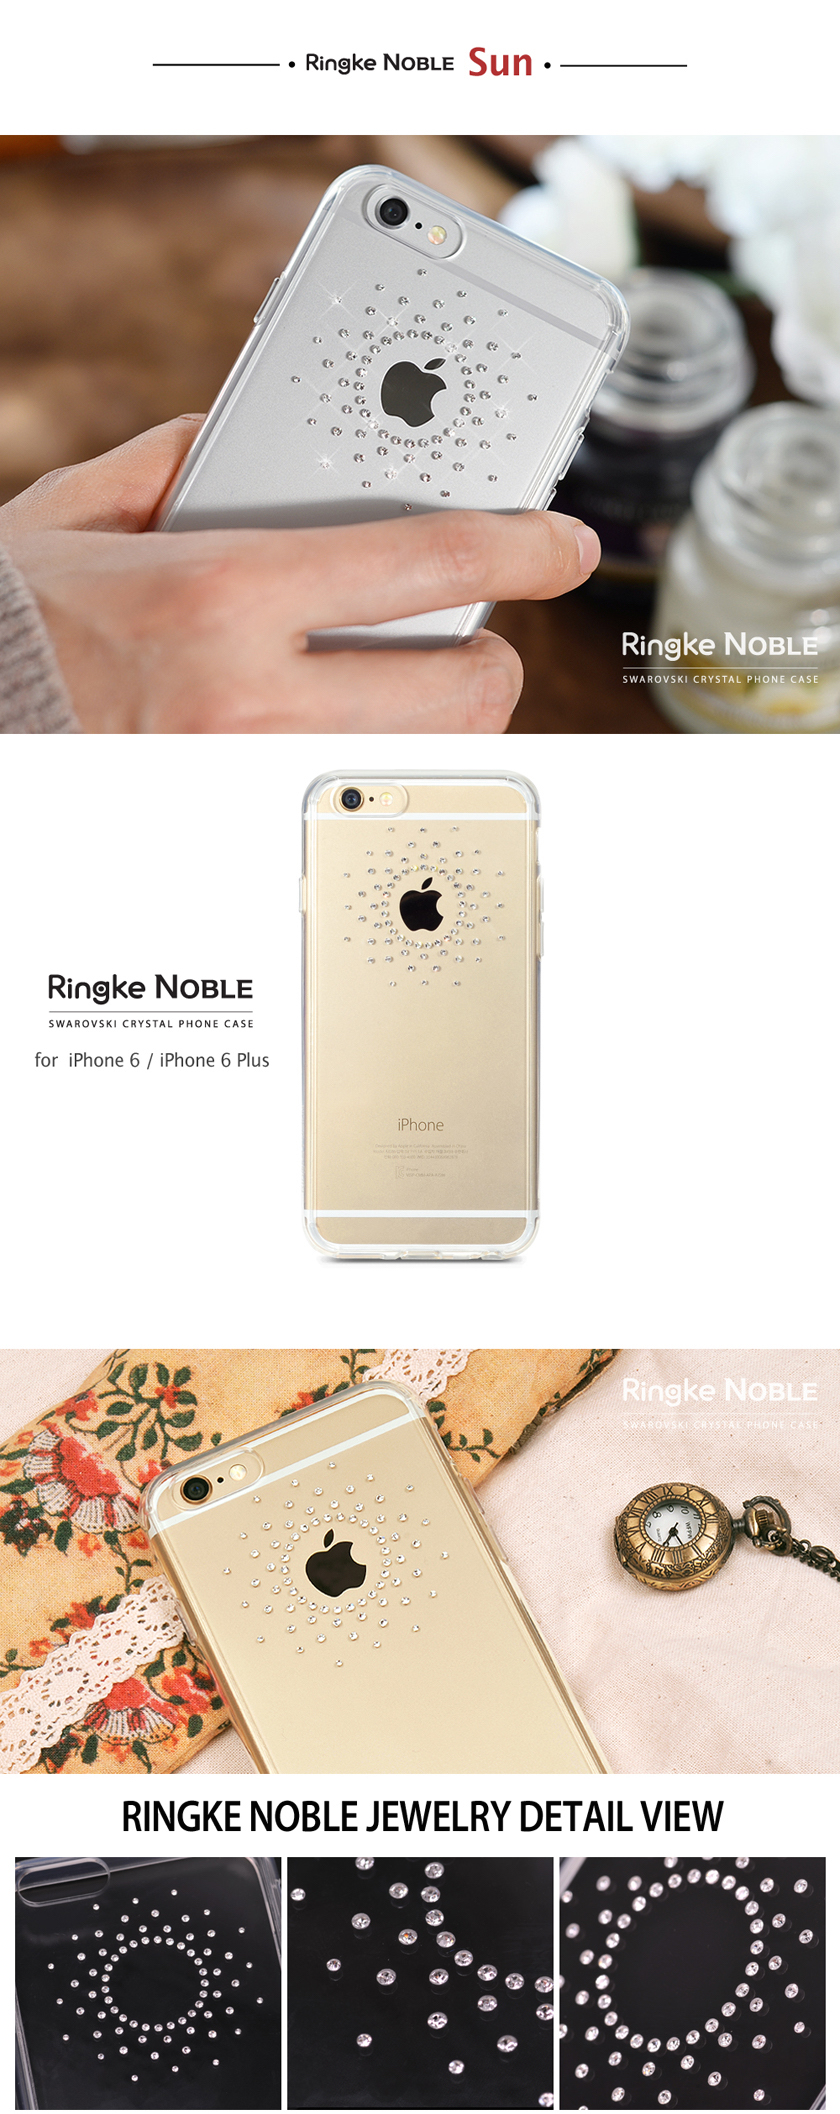 ringke noble iphone 6